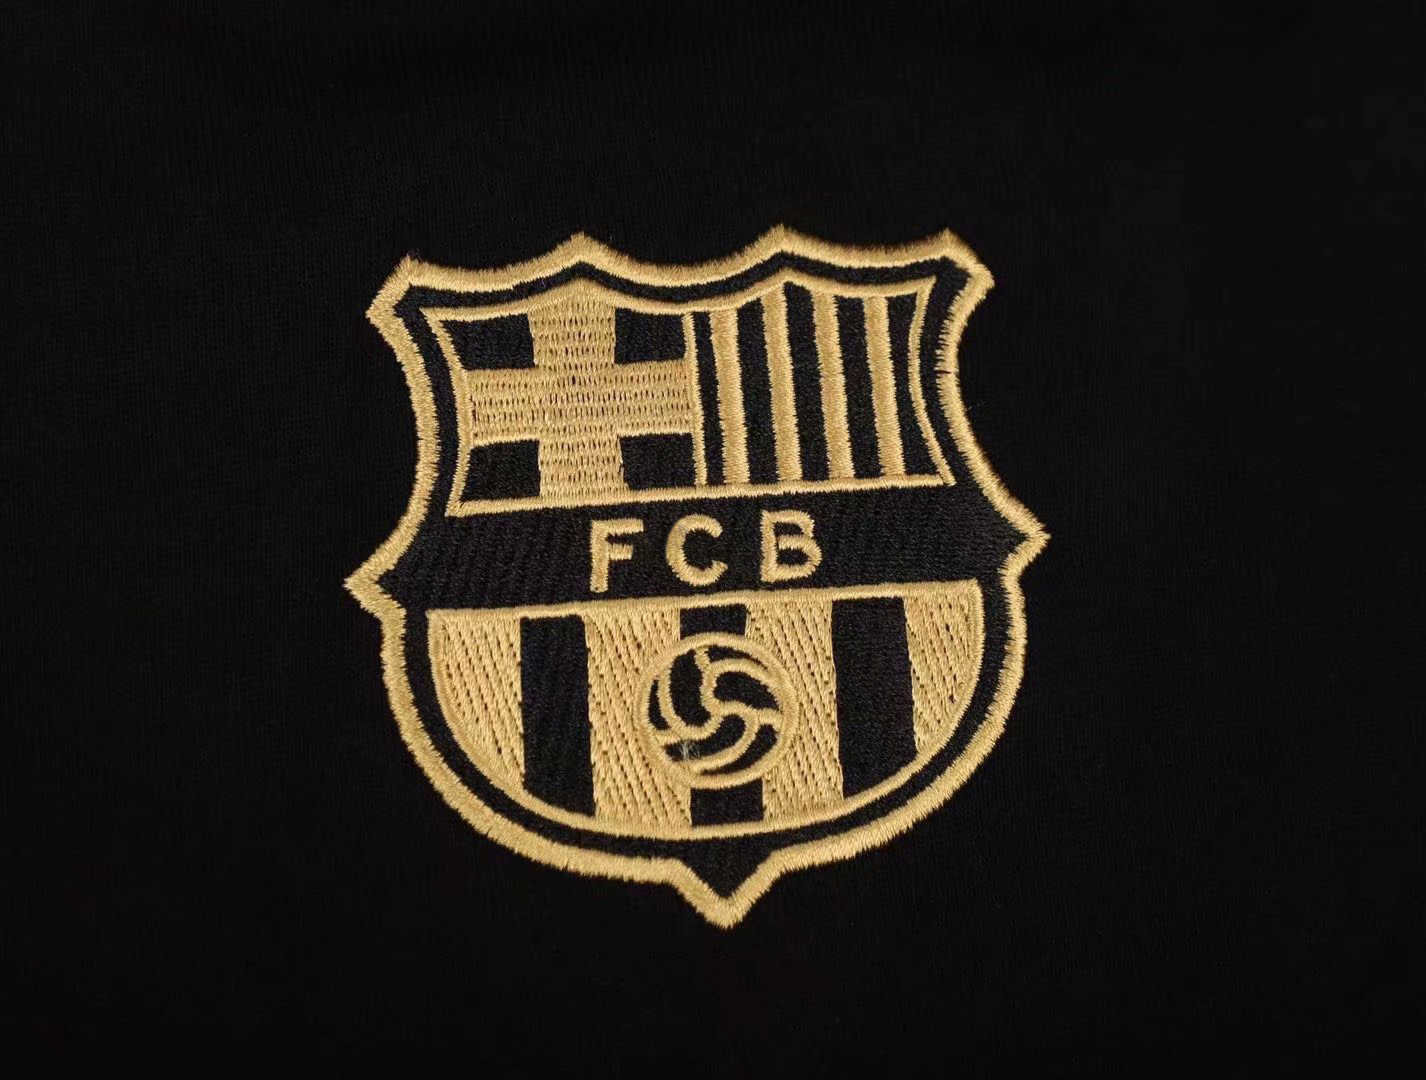 20/21 Barcelona Hoodie Black Men Soccer Winter Jacket